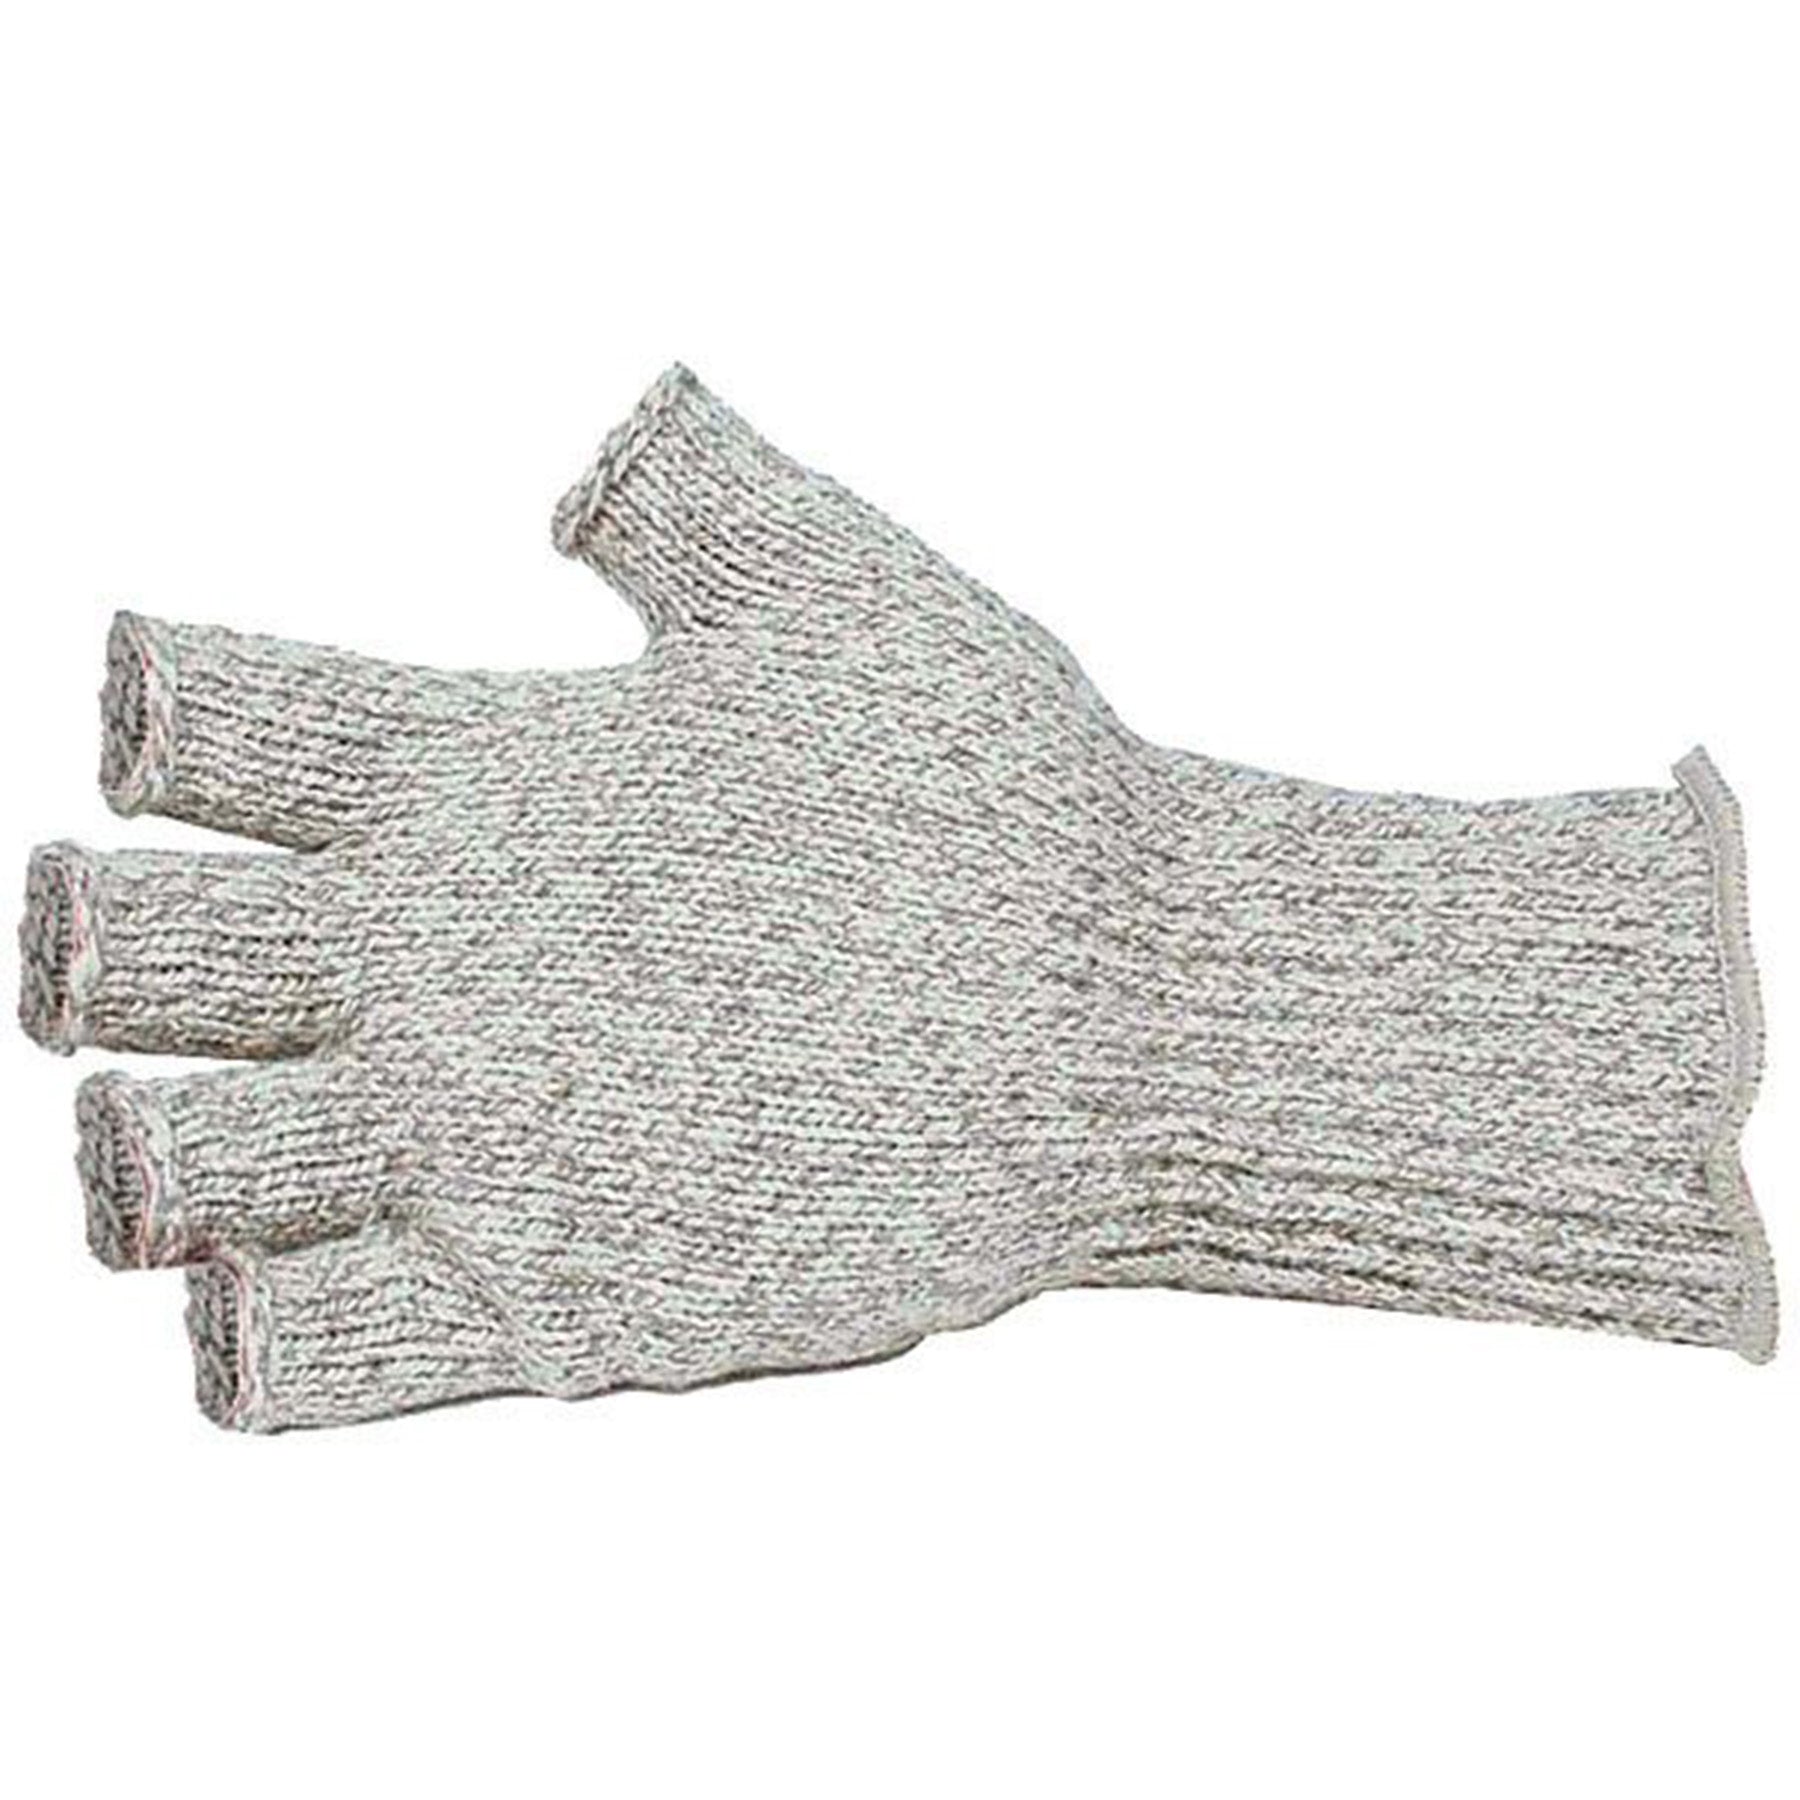 a closeup of one fingerless glove in ragg wool